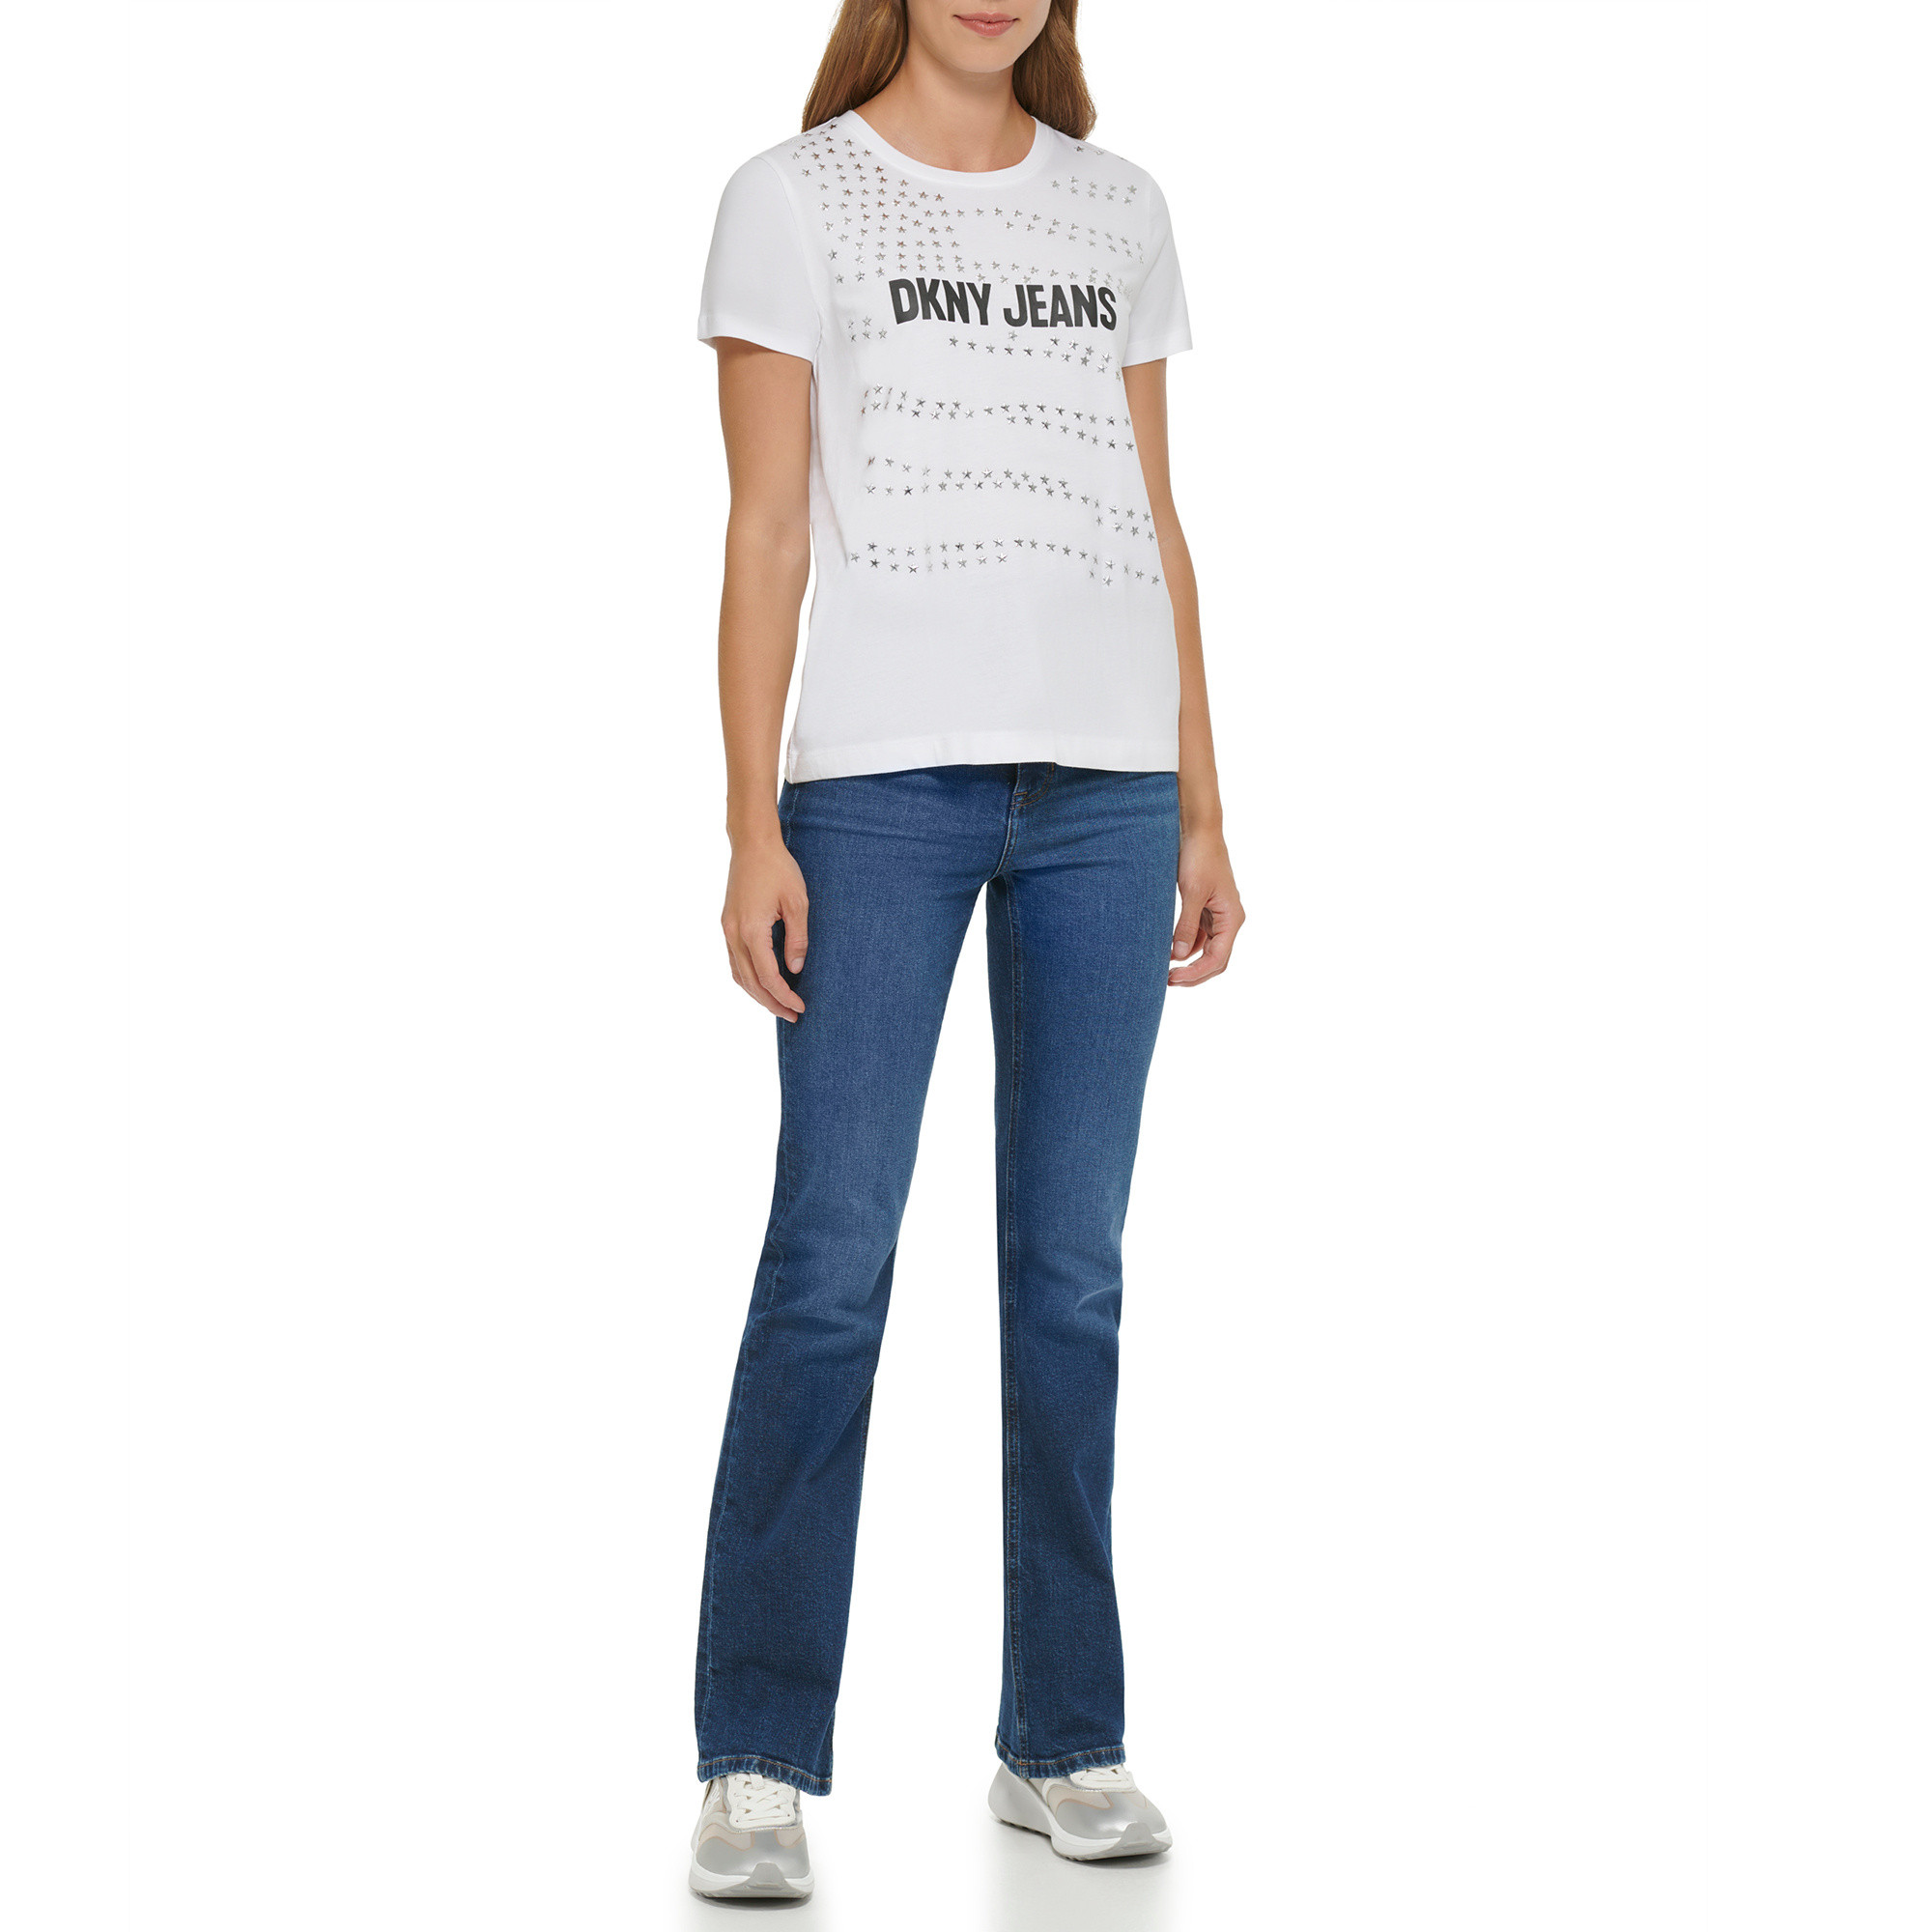 DKNY - T-shirt con logo, Bianco, large image number 6